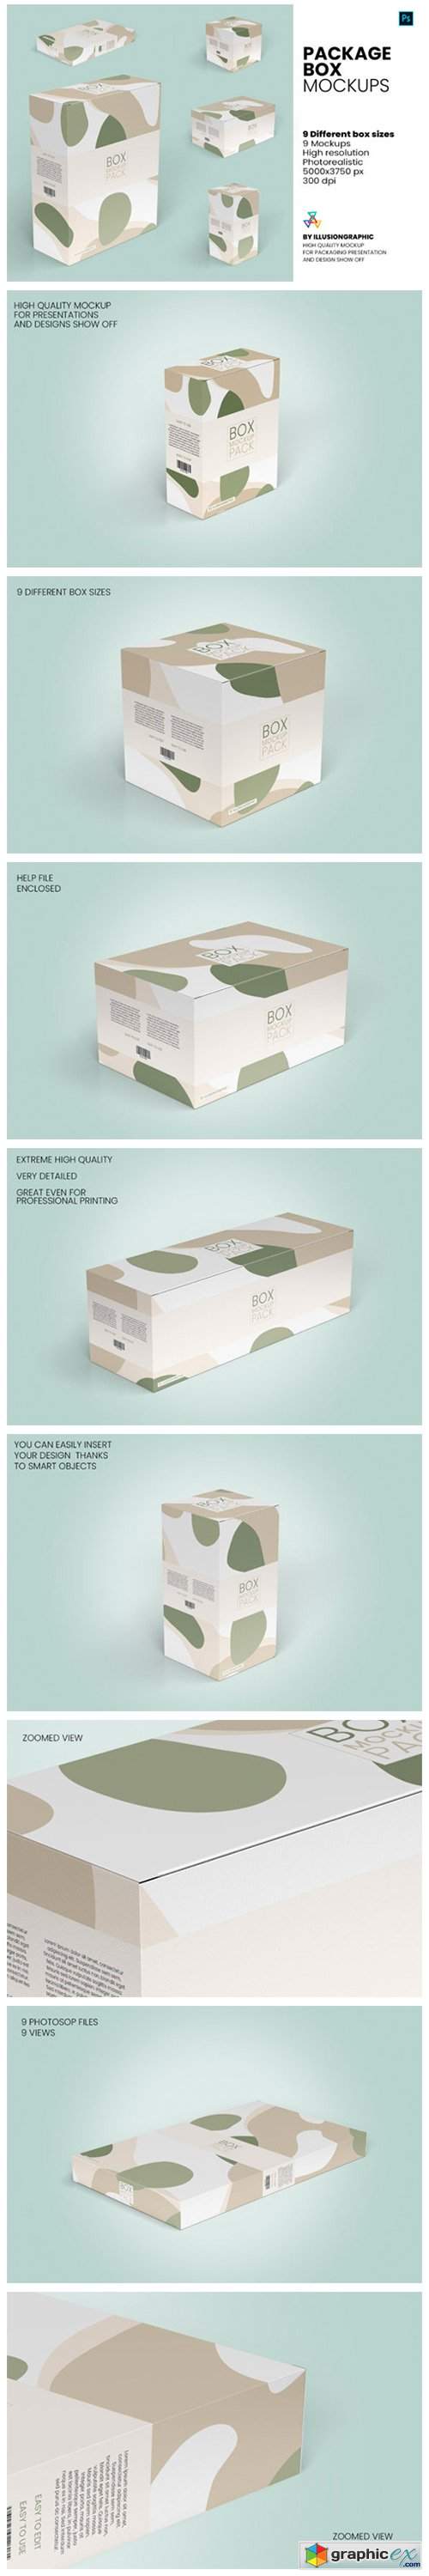  Package Box Mockups - 9 Box Sizes 